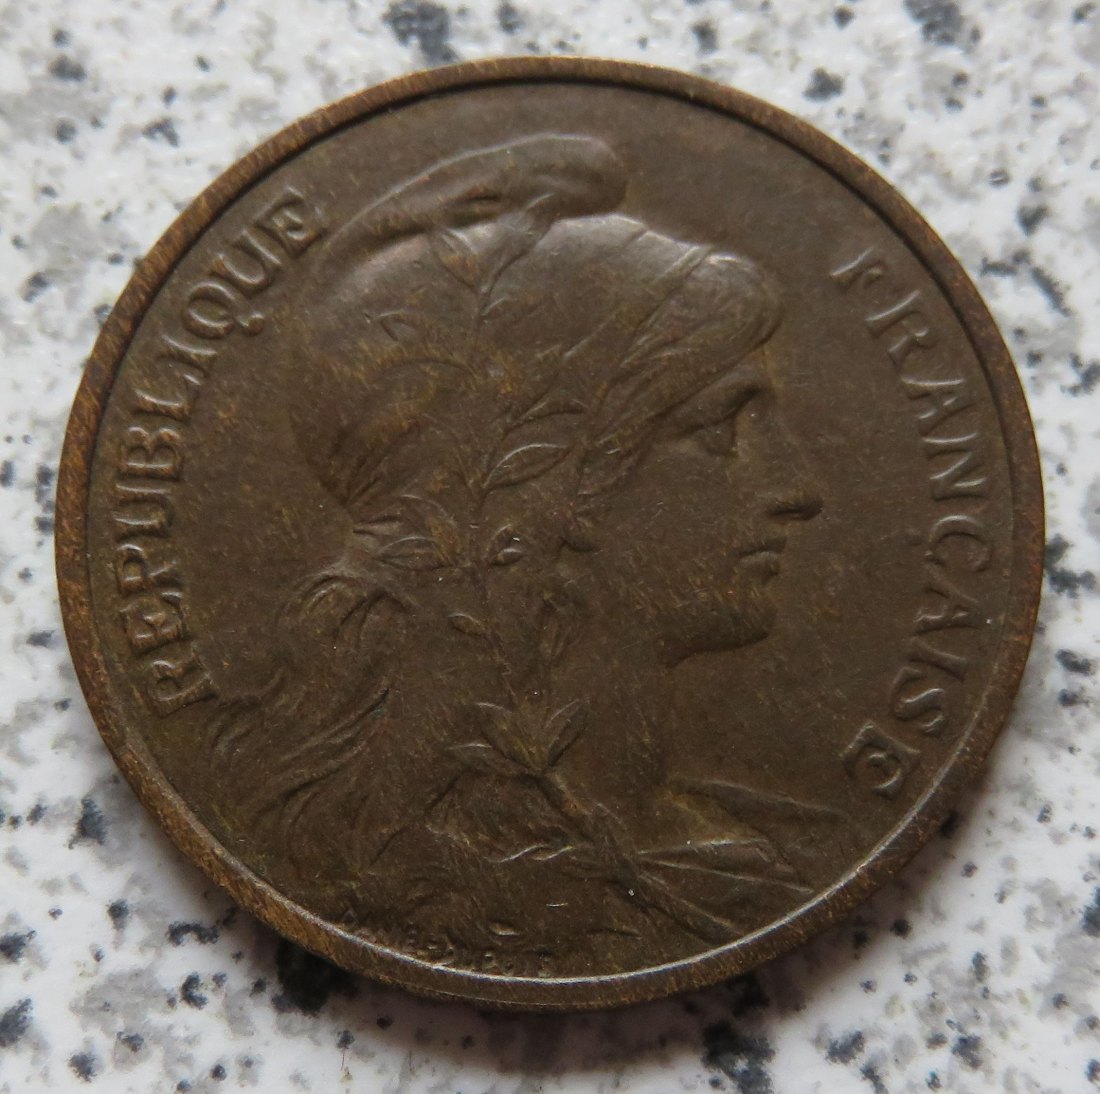  Frankreich 5 Centimes 1912 (2)   